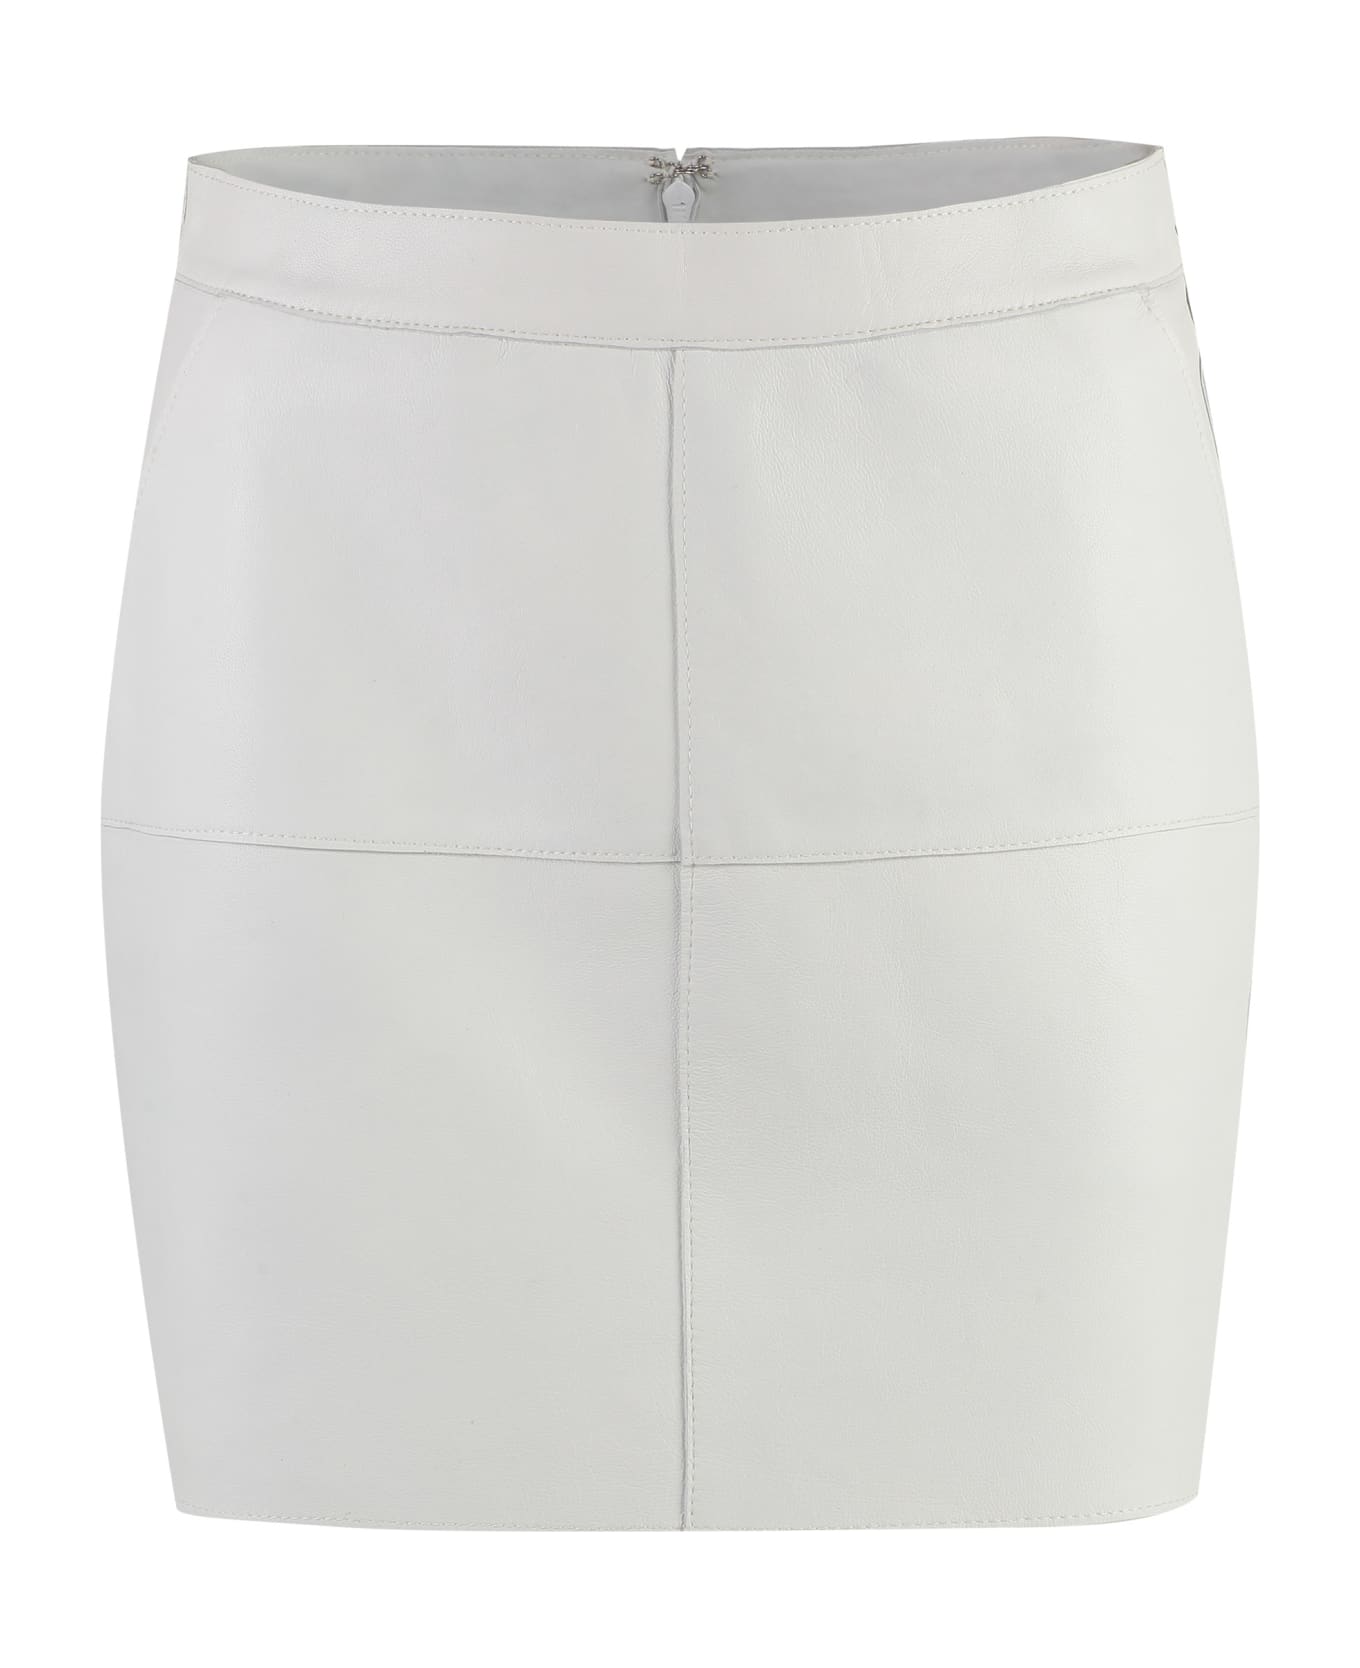 Parosh Leather Mini Skirt - grey スカート